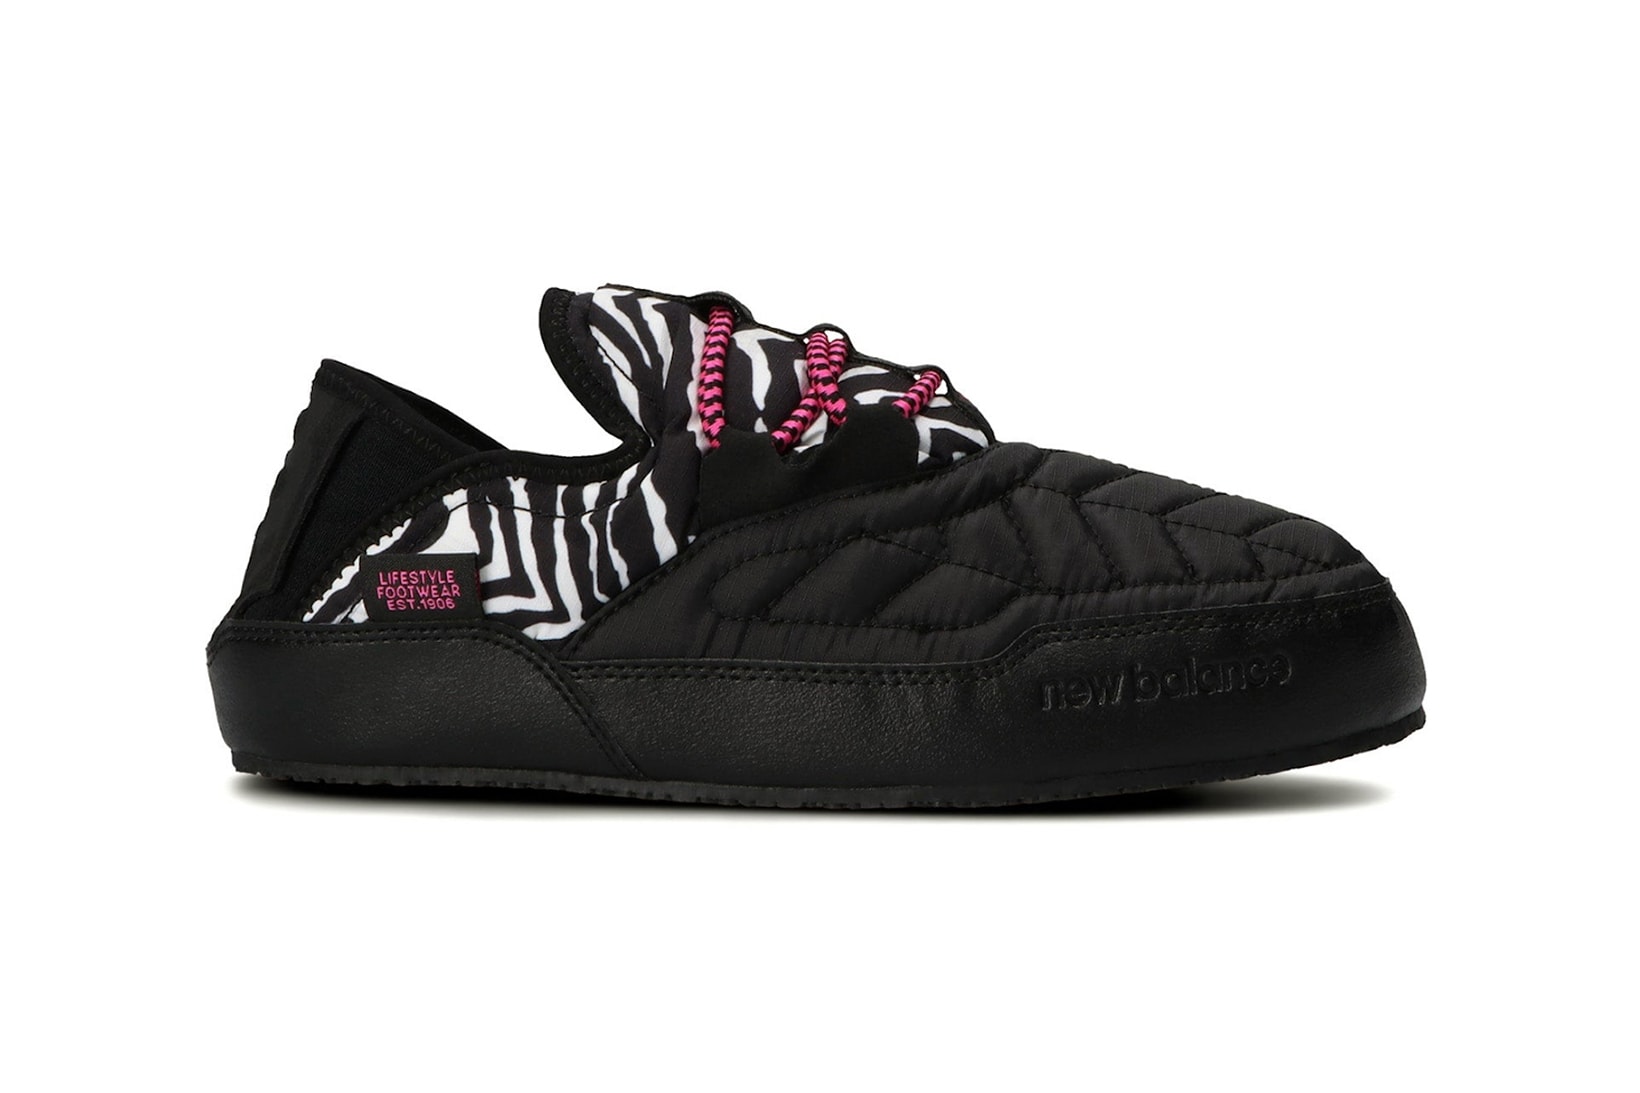 New Balance Caravan Moc Low Slip-Ons Slippers Camo Zebra Black Pink Footwear Shoes